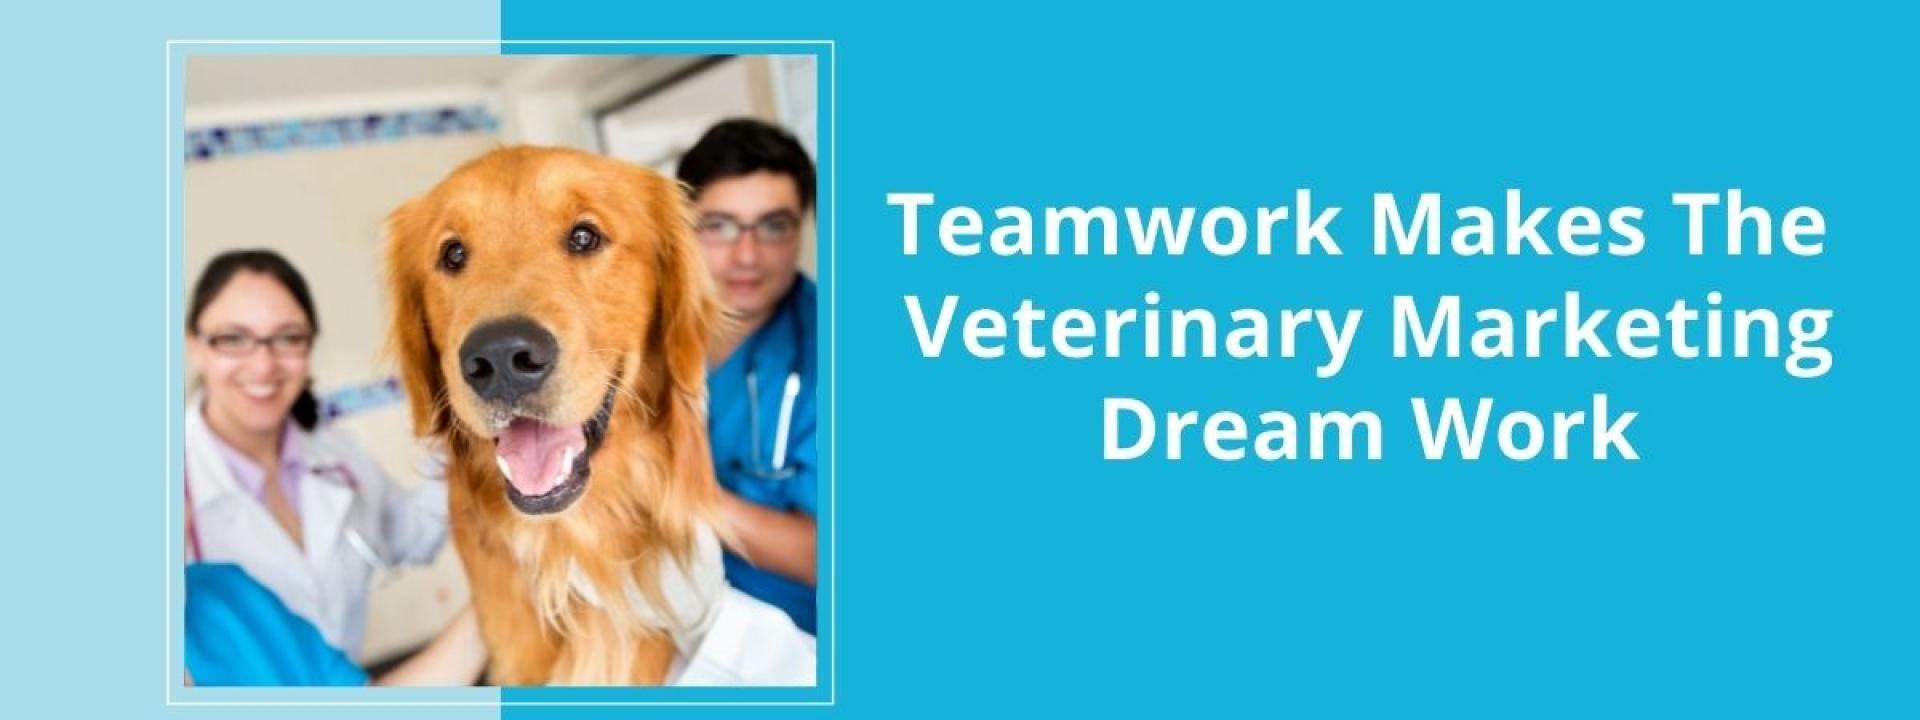 Teamwork Makes The Veterinary Marketing Dream Work